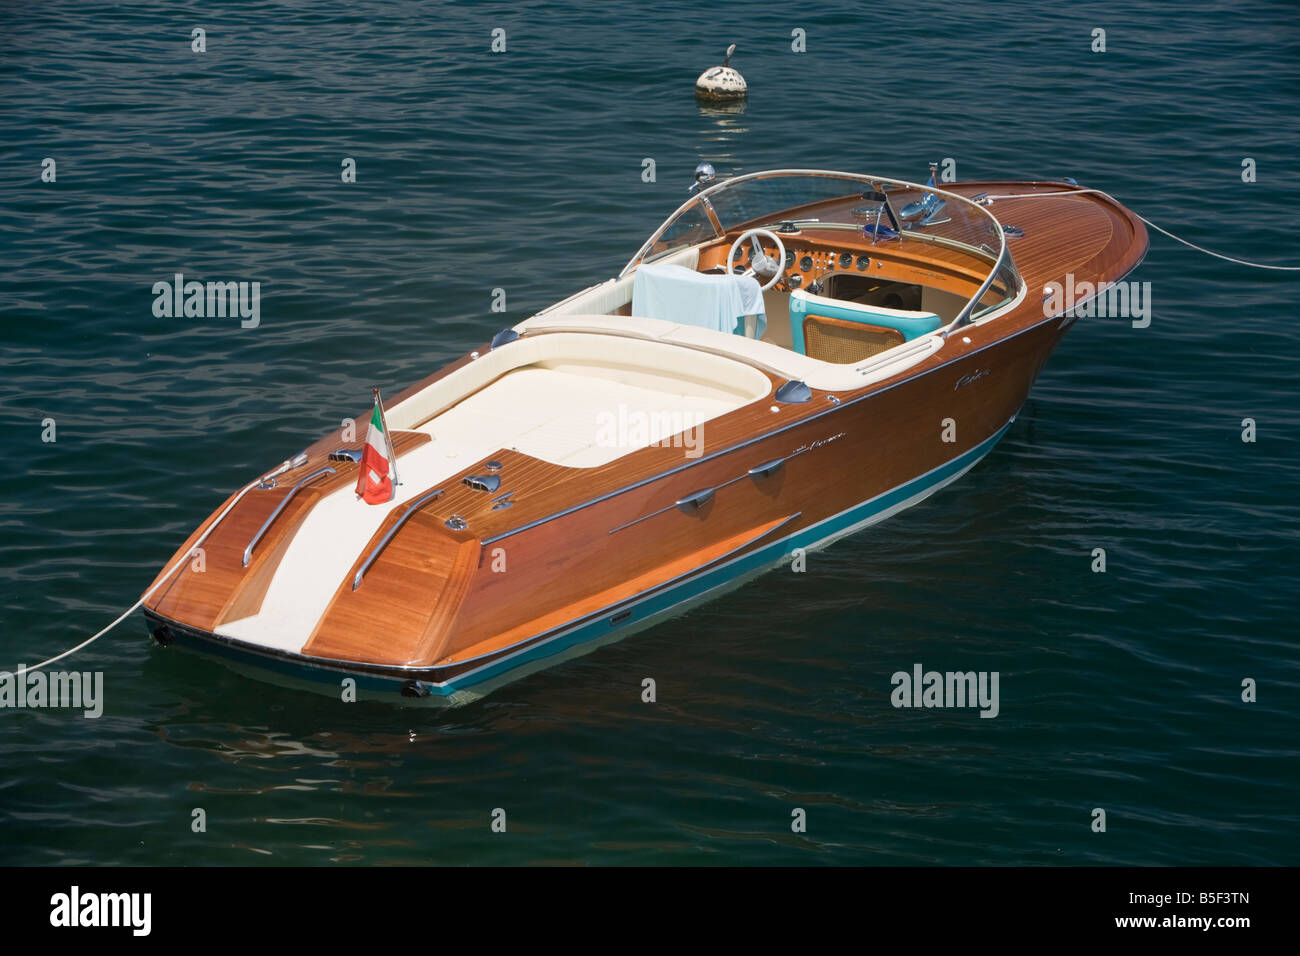 Riva Aquarama Speedboat Stock Photo: 20615973 - Alamy